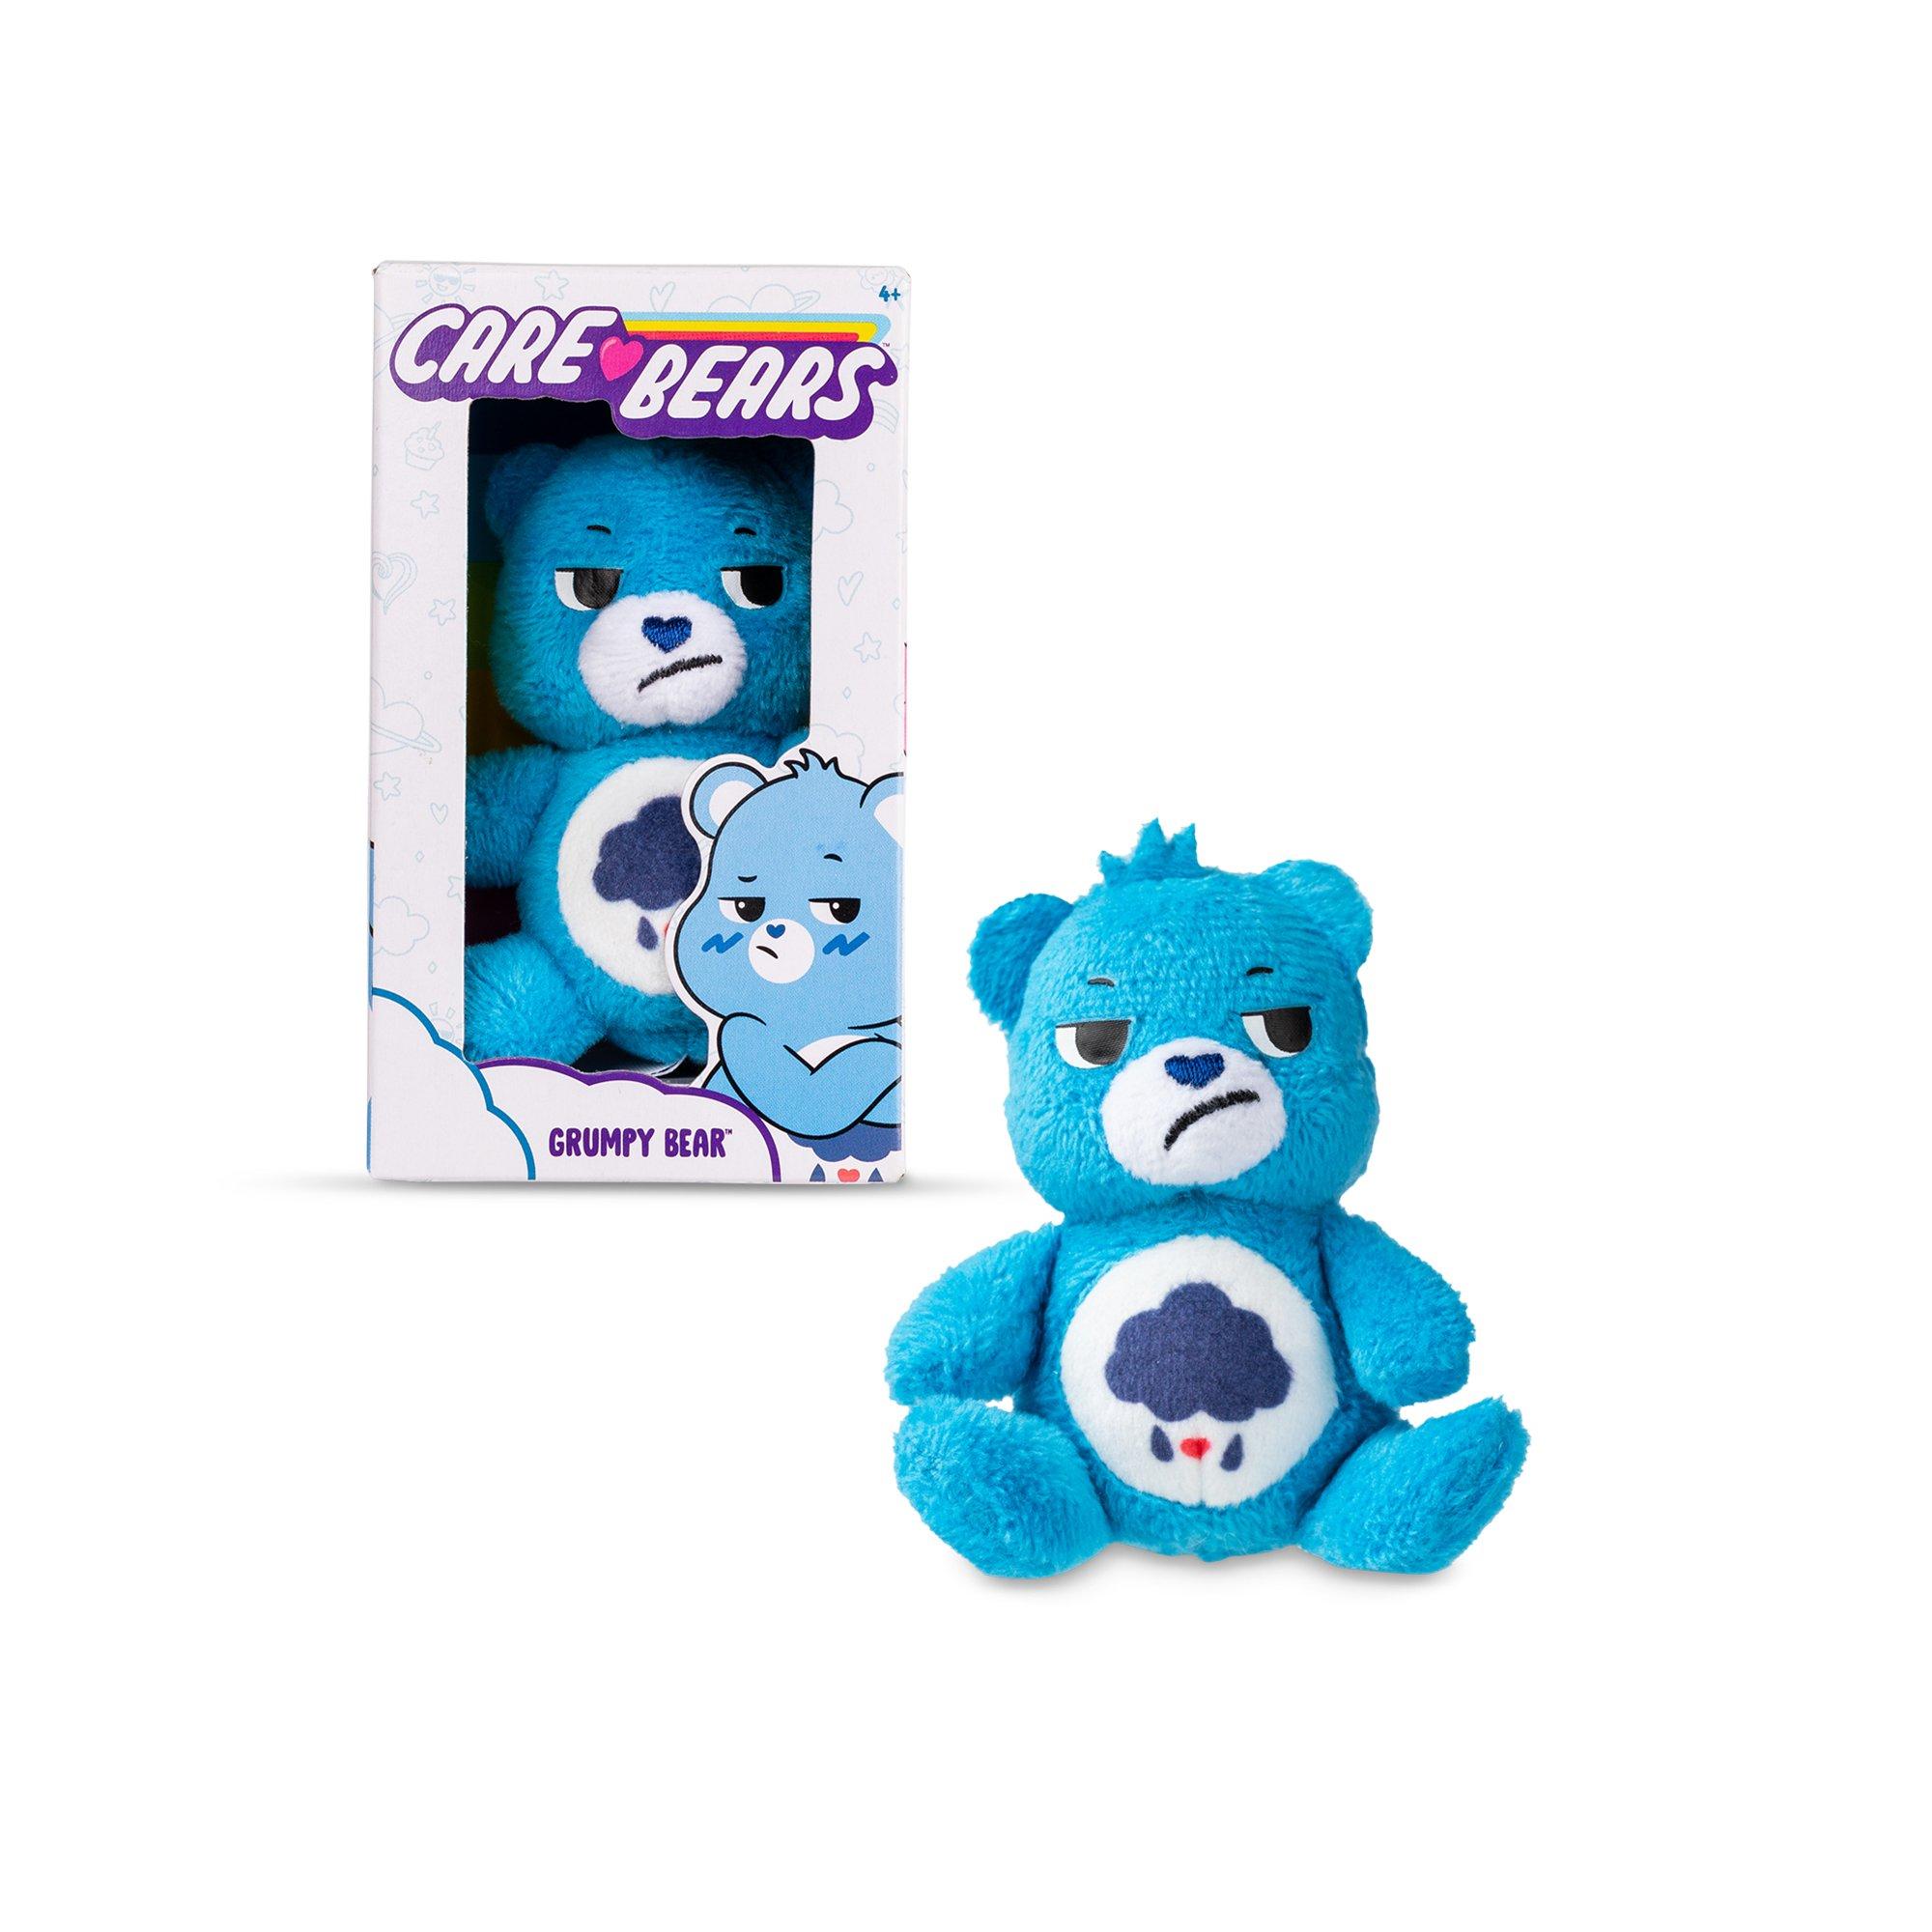 https://media.gamestop.com/i/gamestop/20006380/Care-Bears-Micro-Grumpy-Bear-3-in-Plush